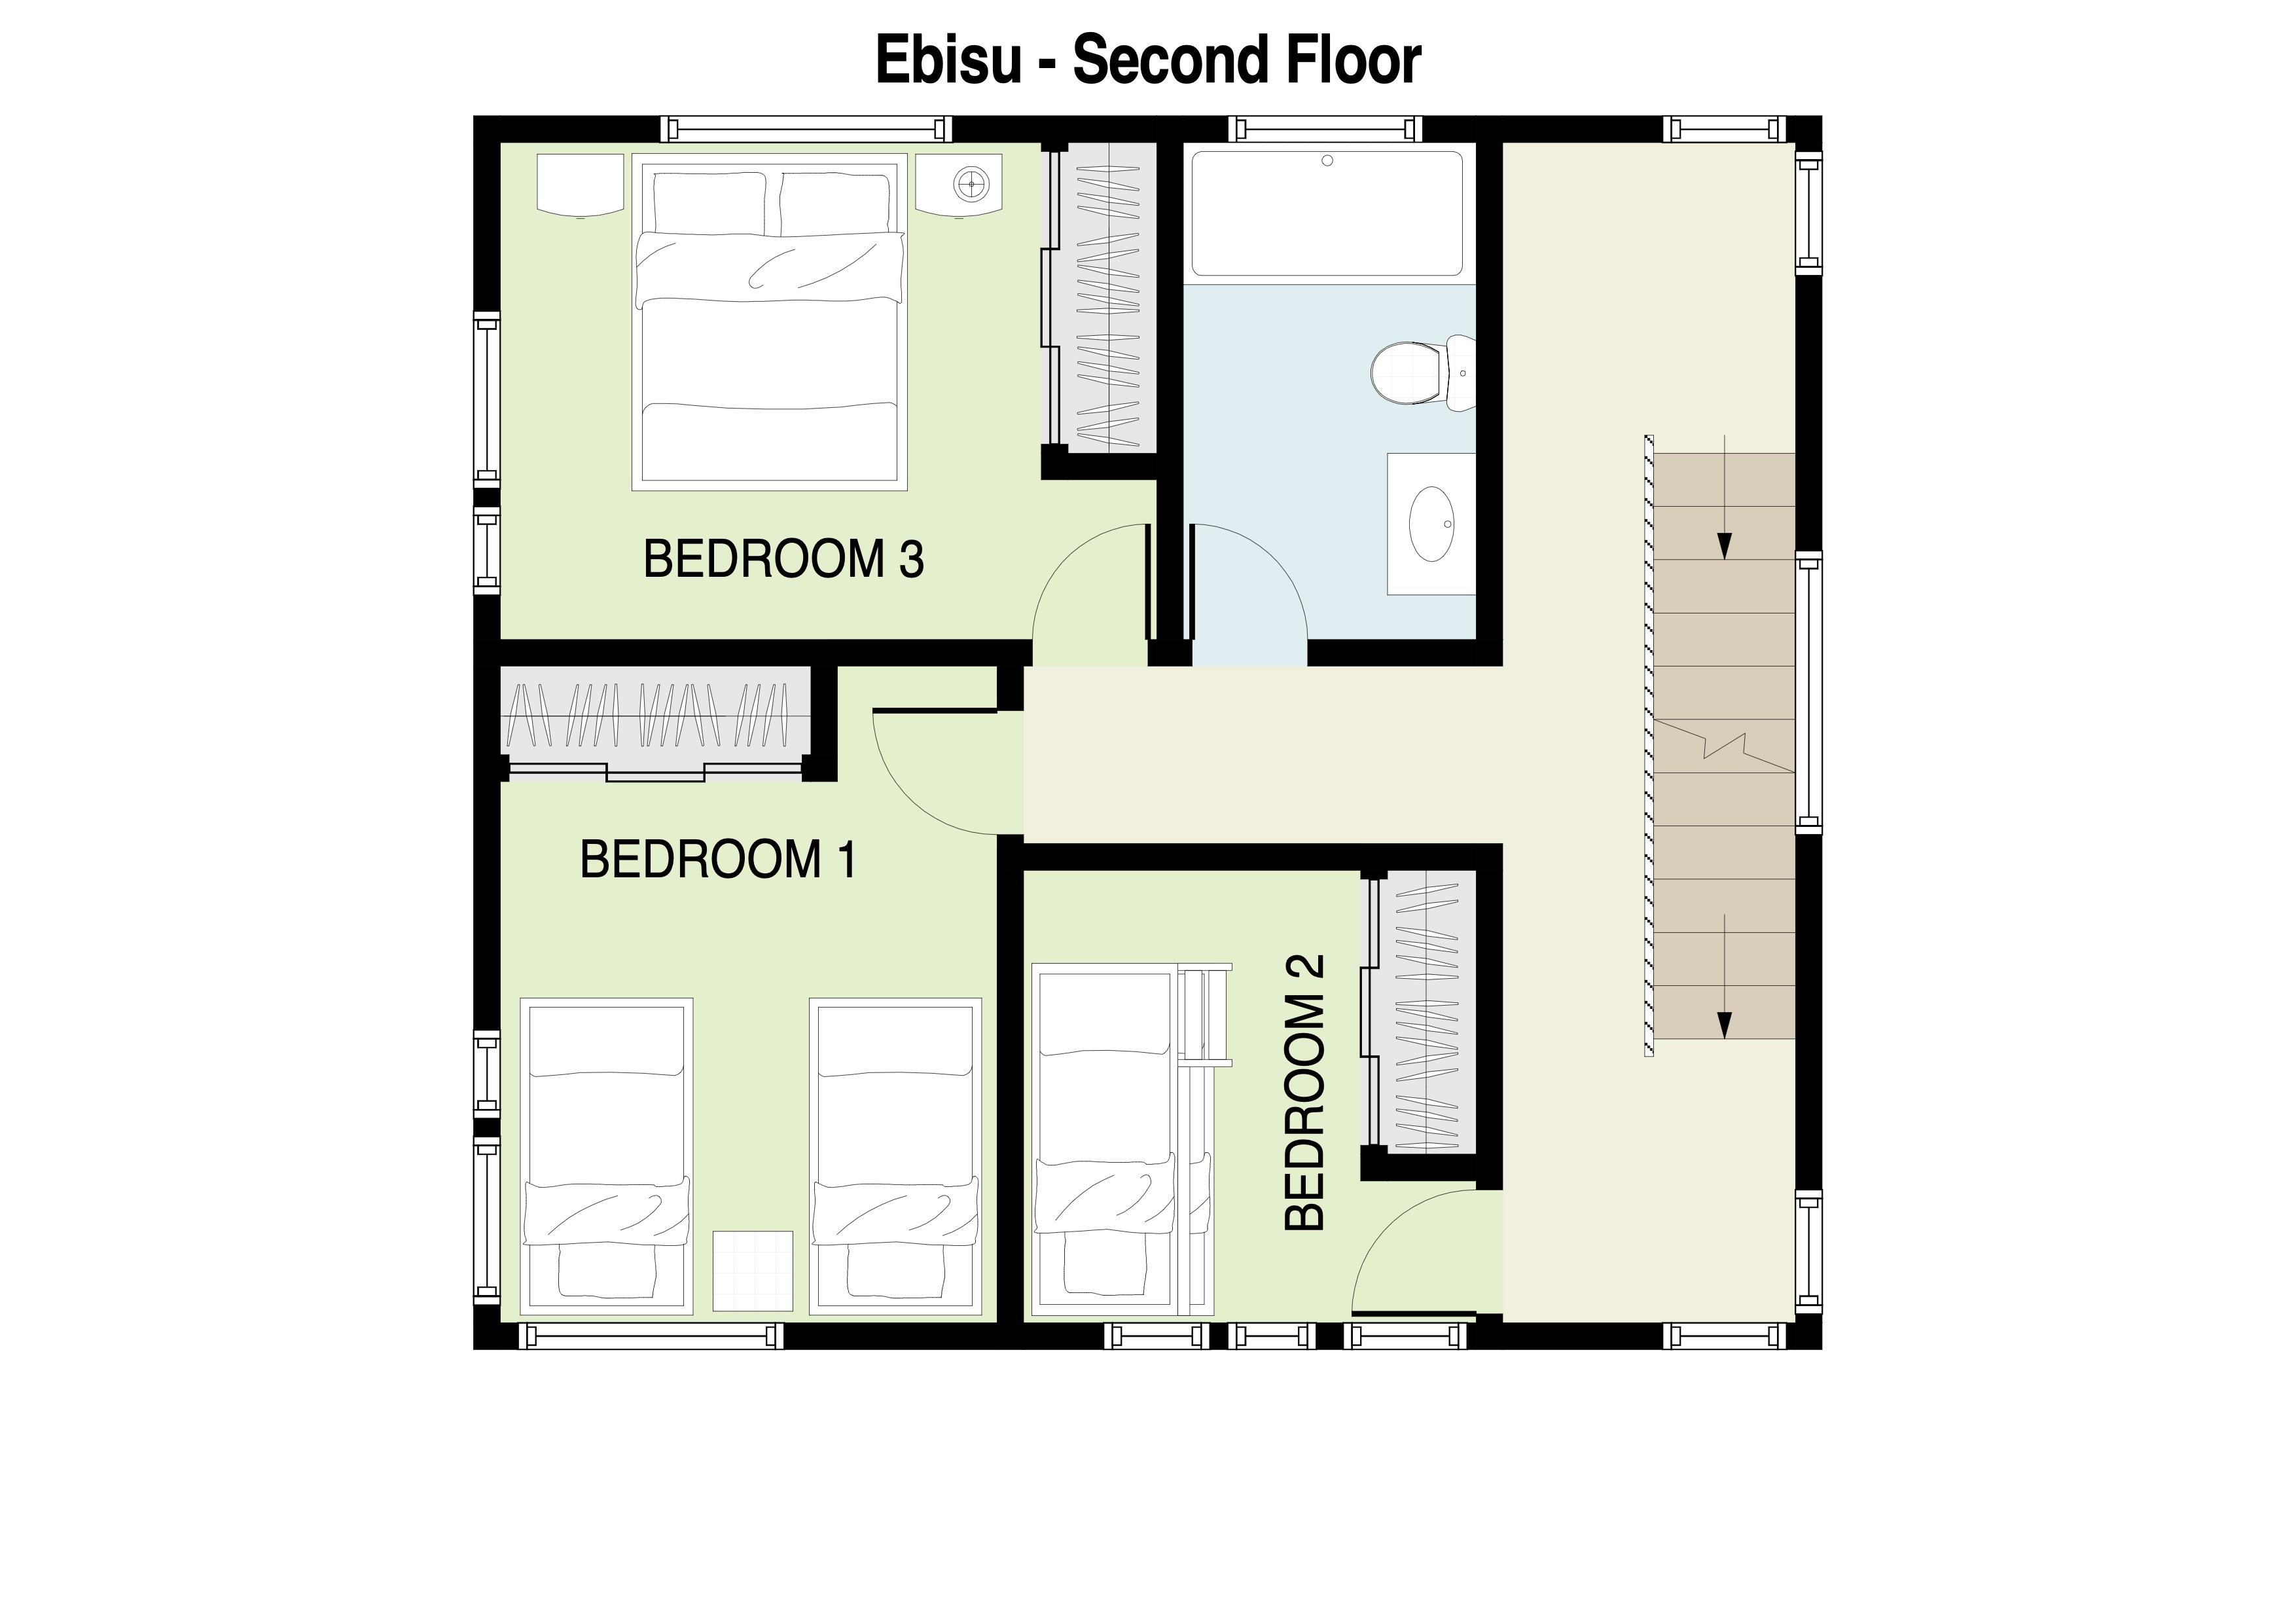 Ebisu 2nd Floor Plan